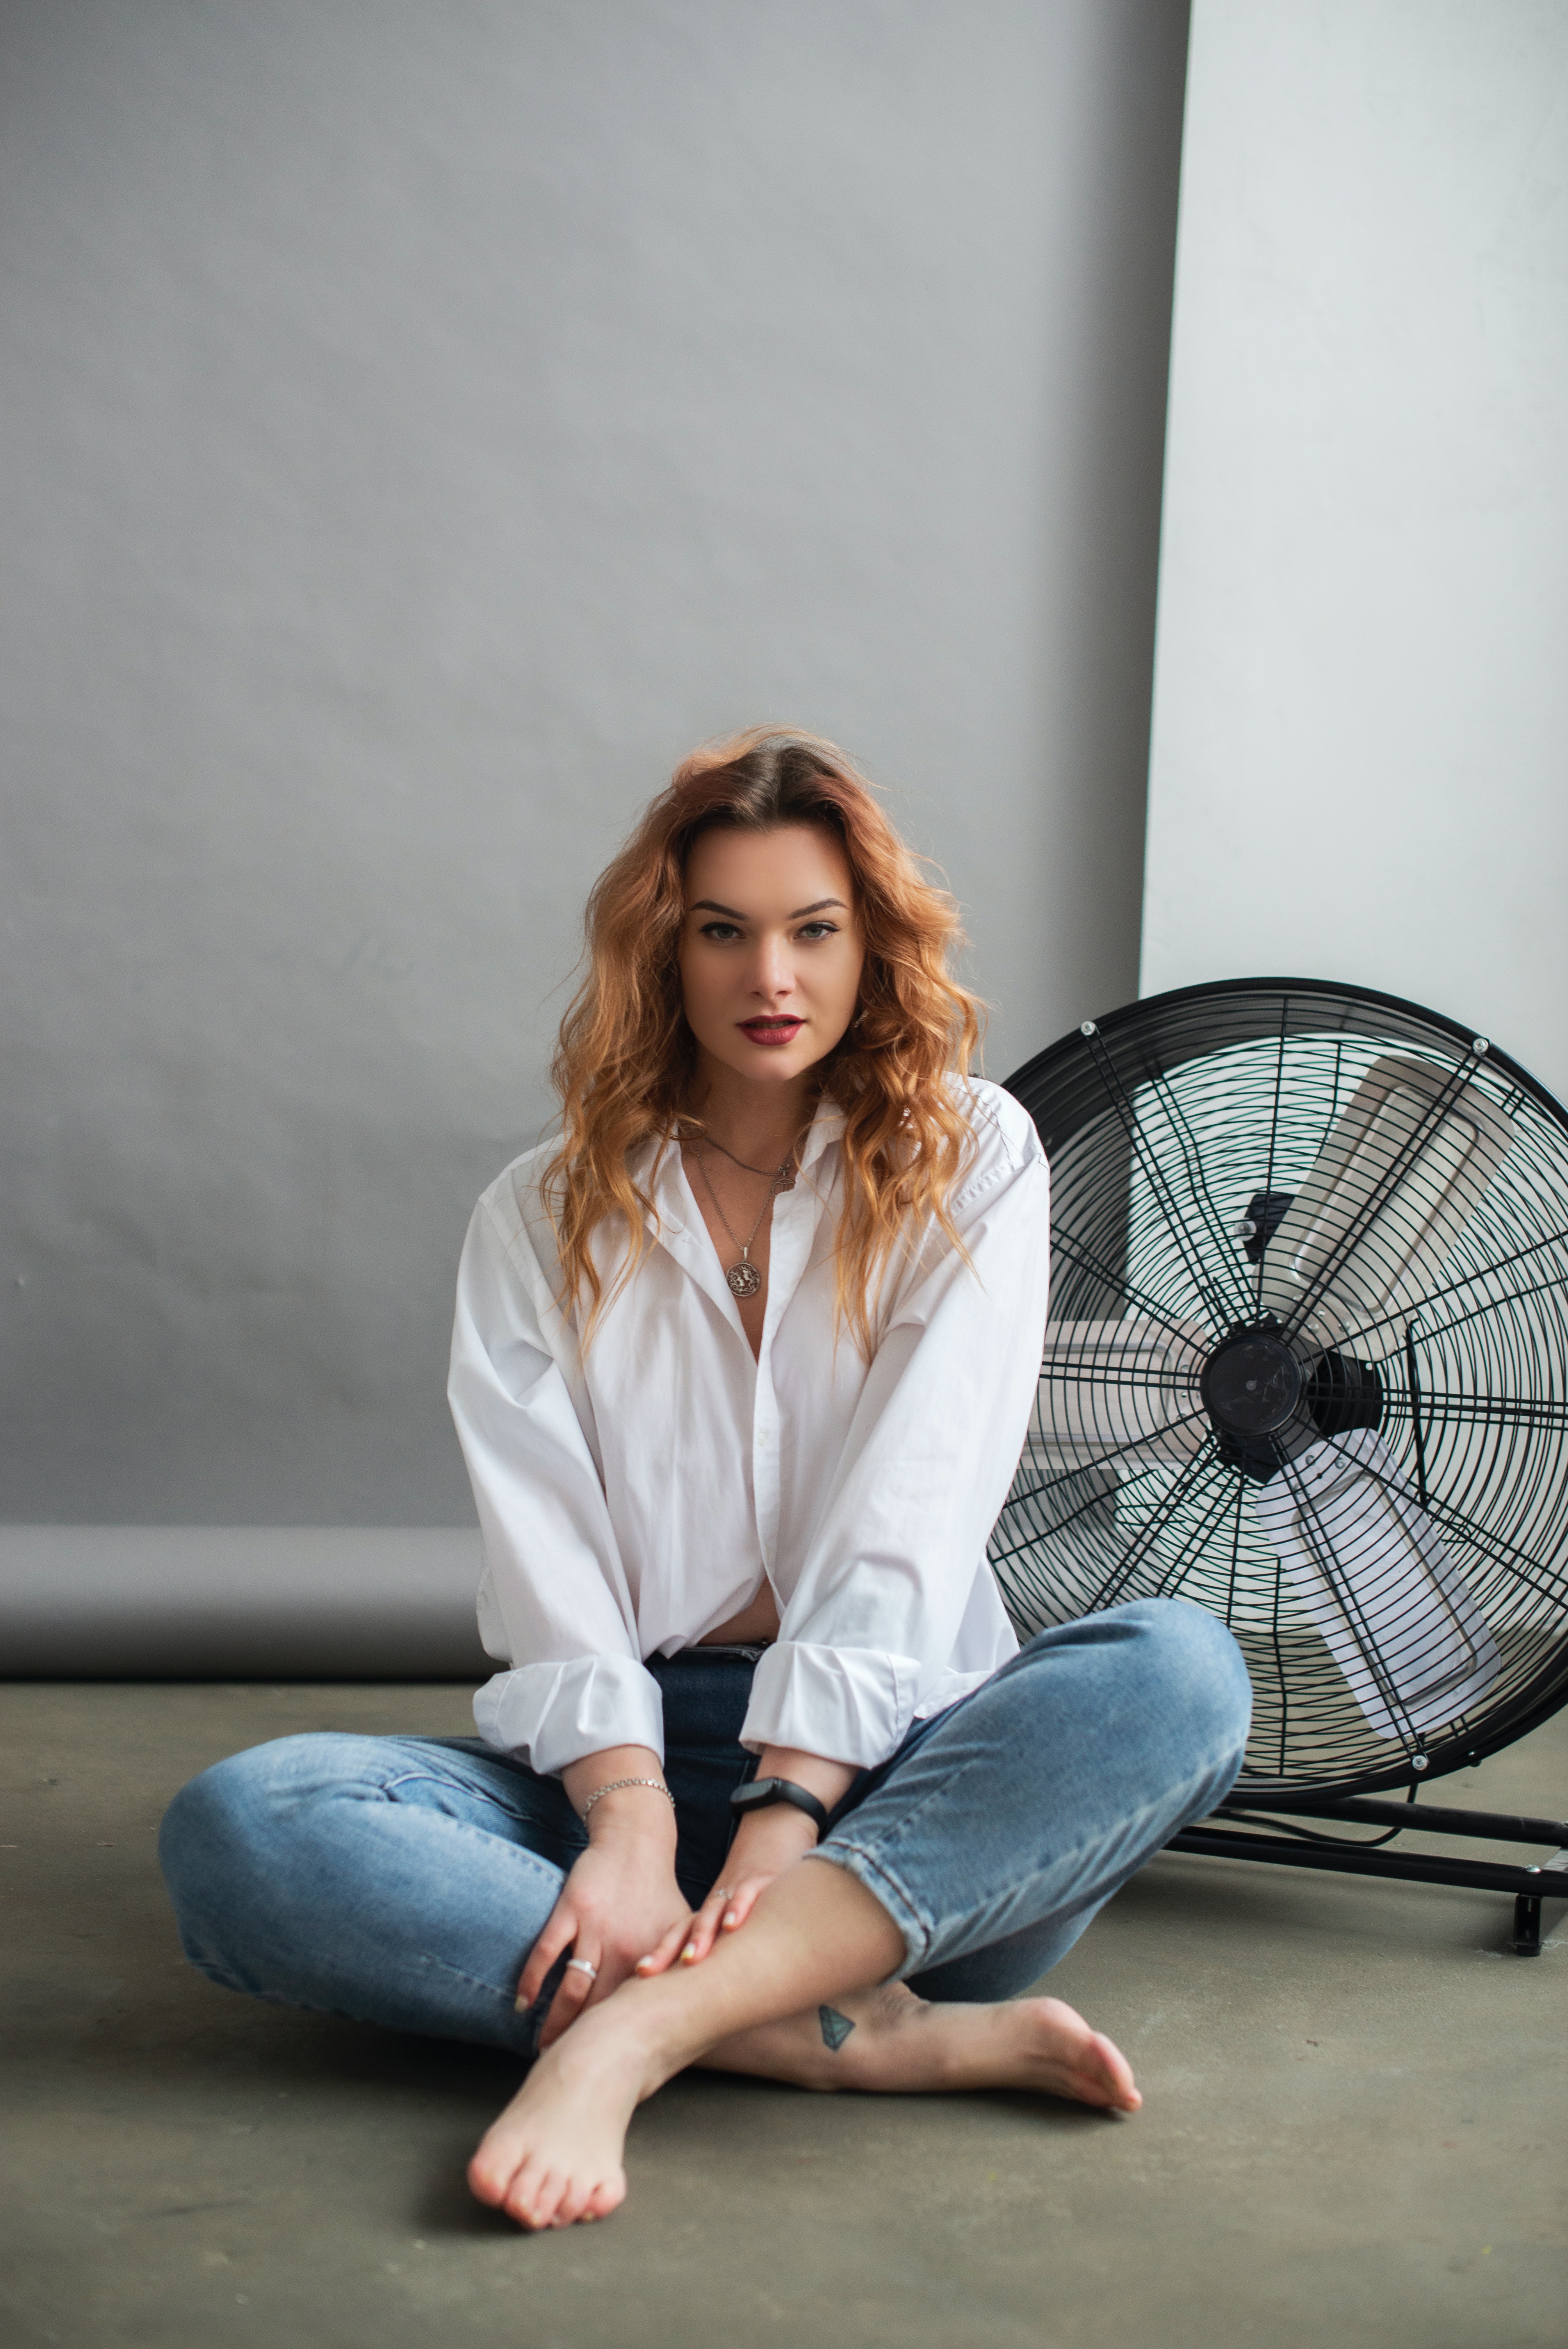 A woman sitting in front of a fan. | Source: Pexels